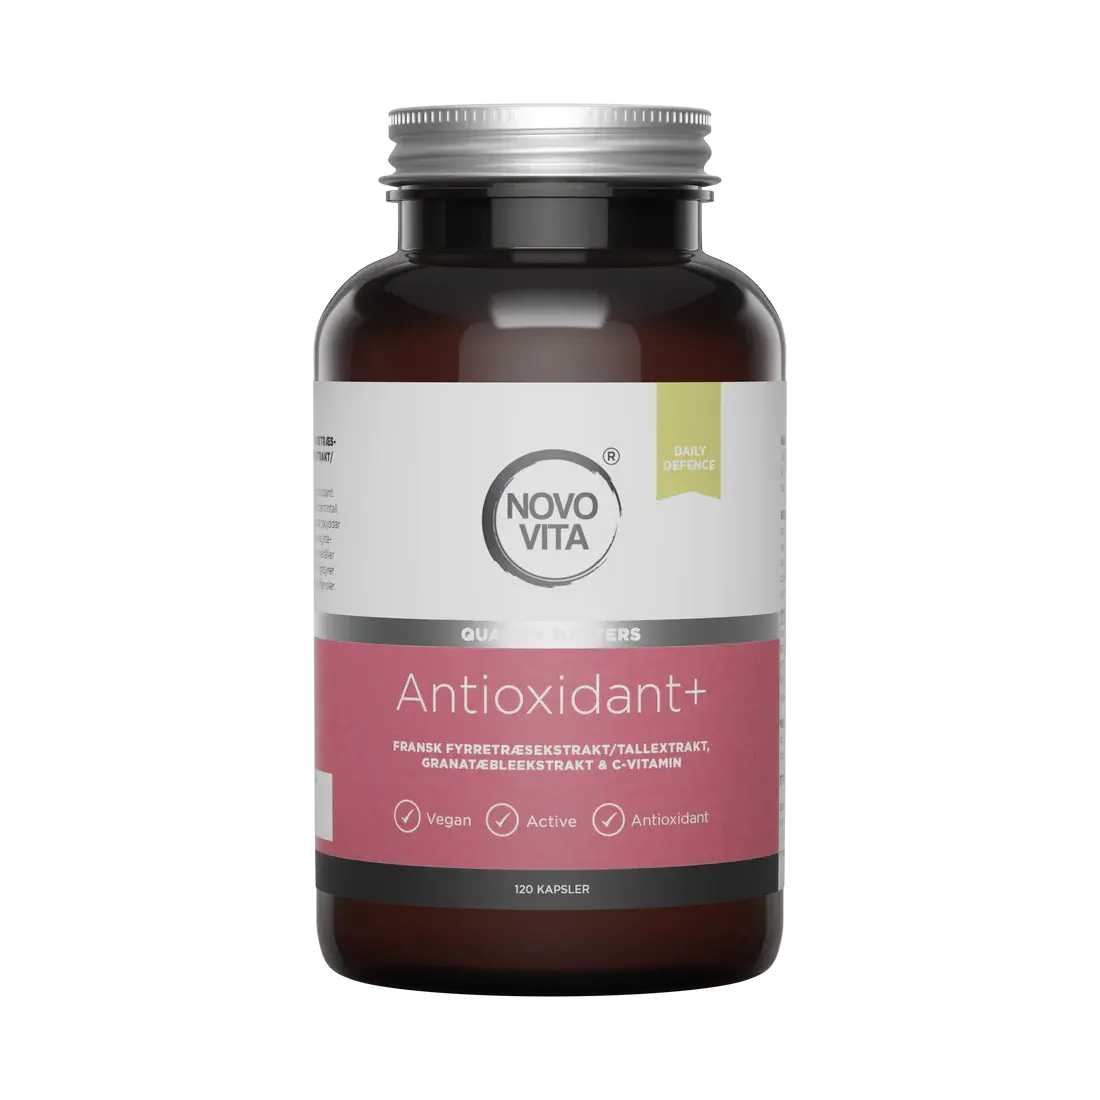 Antioxidant+ Kosttilskud Novo Vita